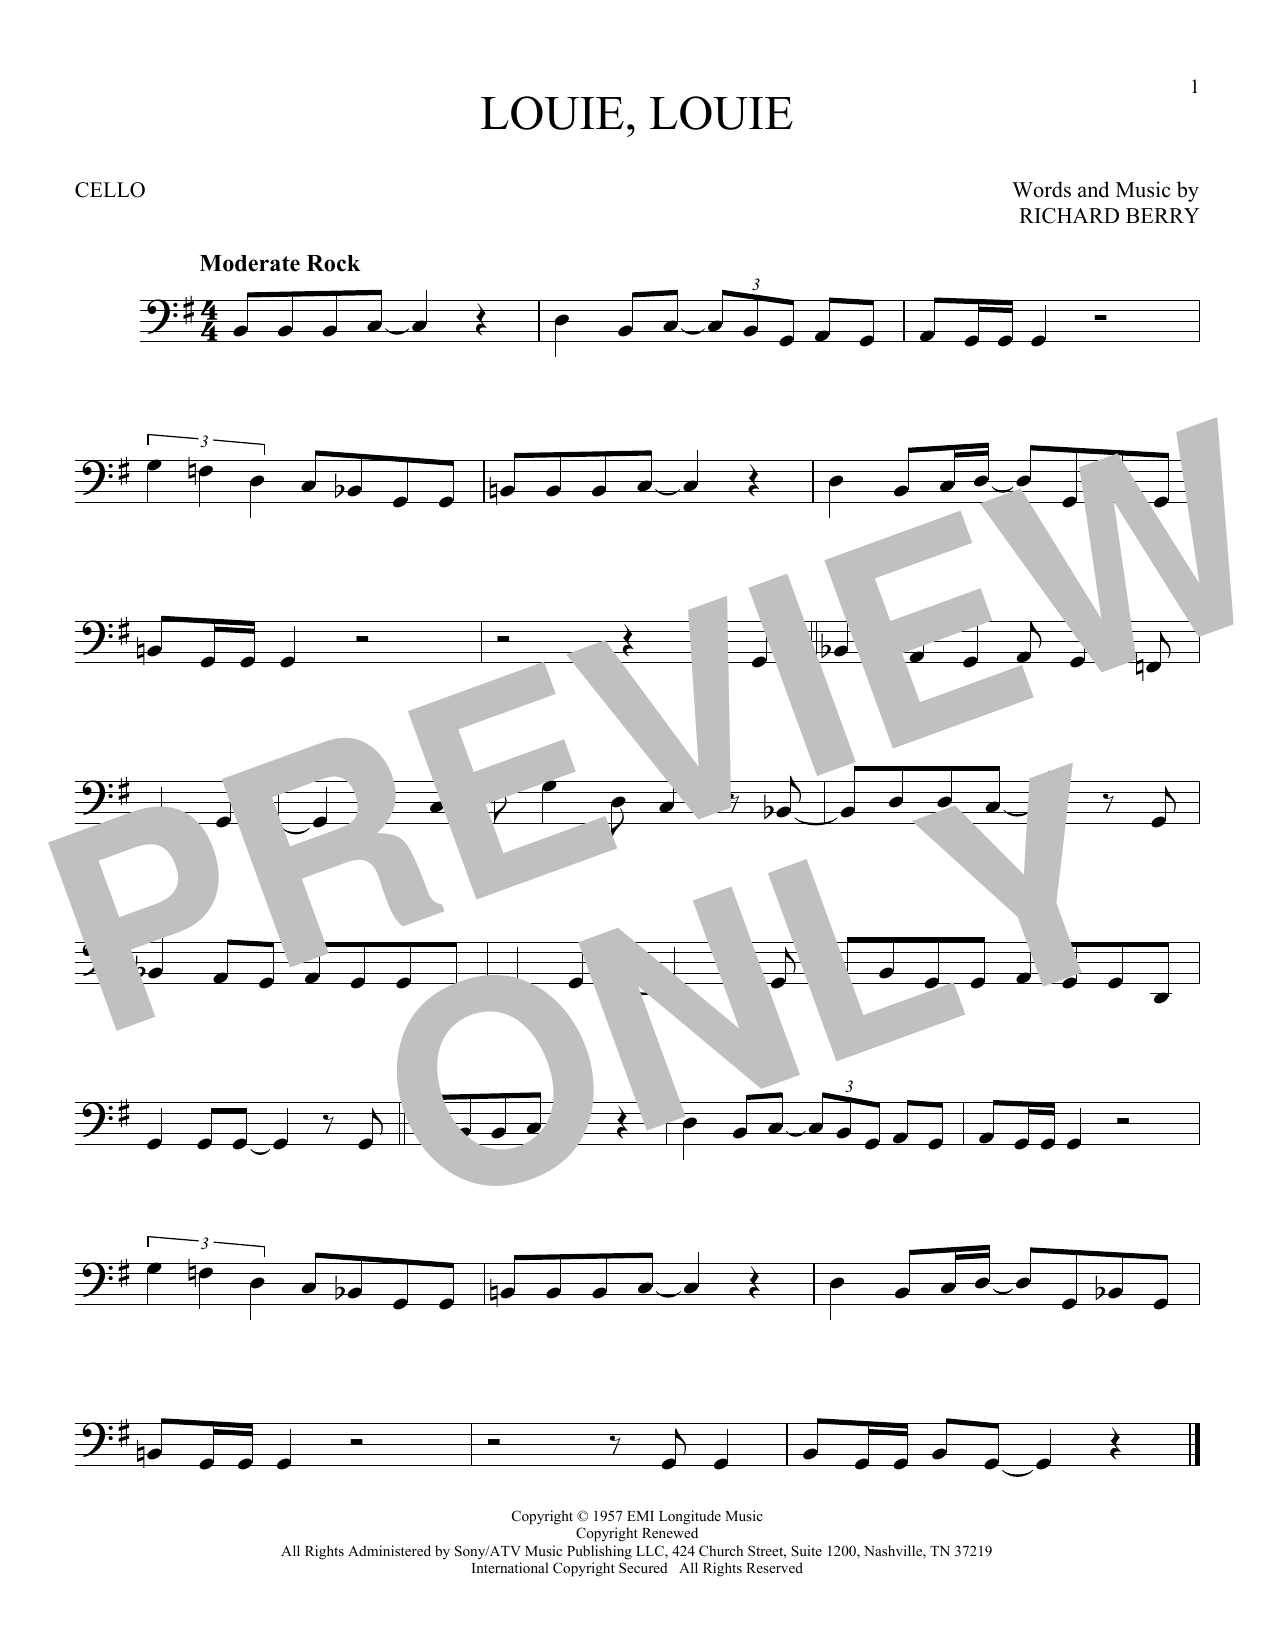 Kingsmen Louie, Louie Sheet Music Notes & Chords for Alto Saxophone - Download or Print PDF